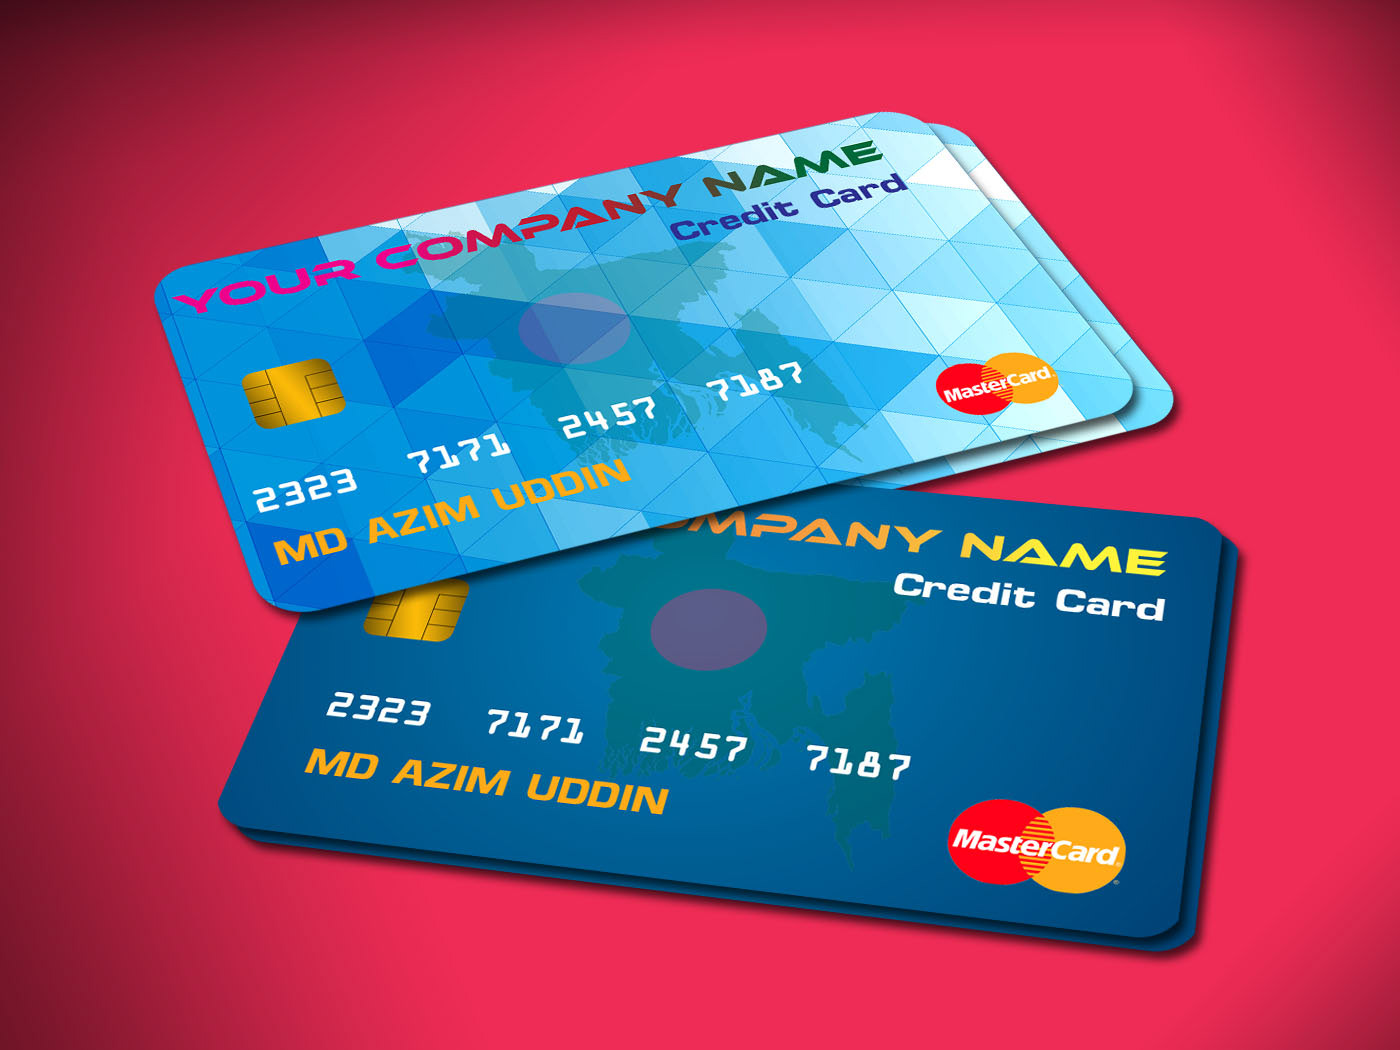 Bank credit card Debit card master mard visa card world master card